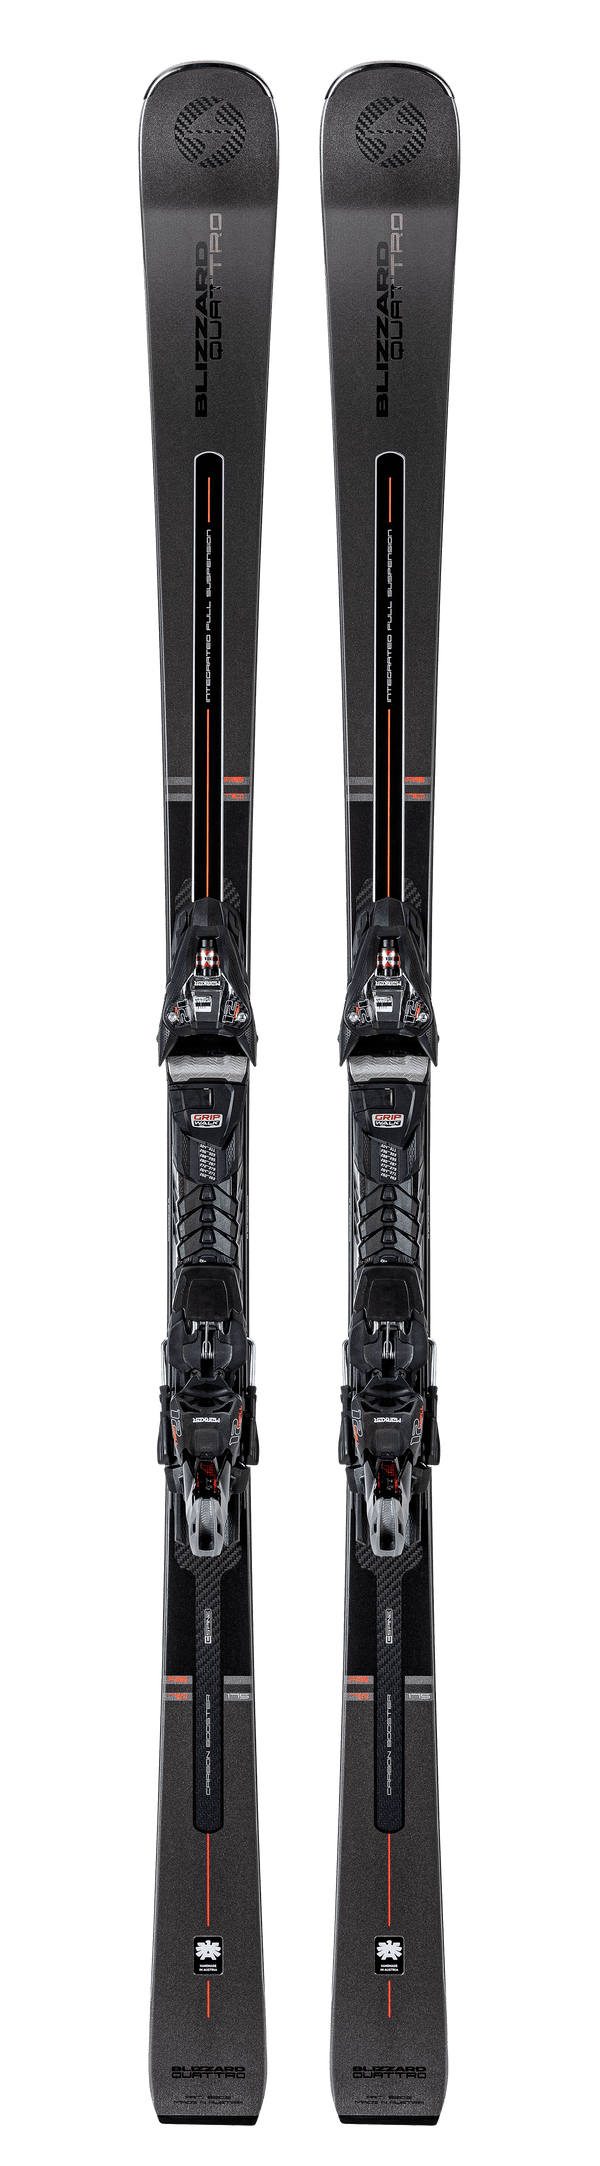 Blizzard Quattro RS70 Herren Skier + Marker XCELL 12 Ski All Mountain